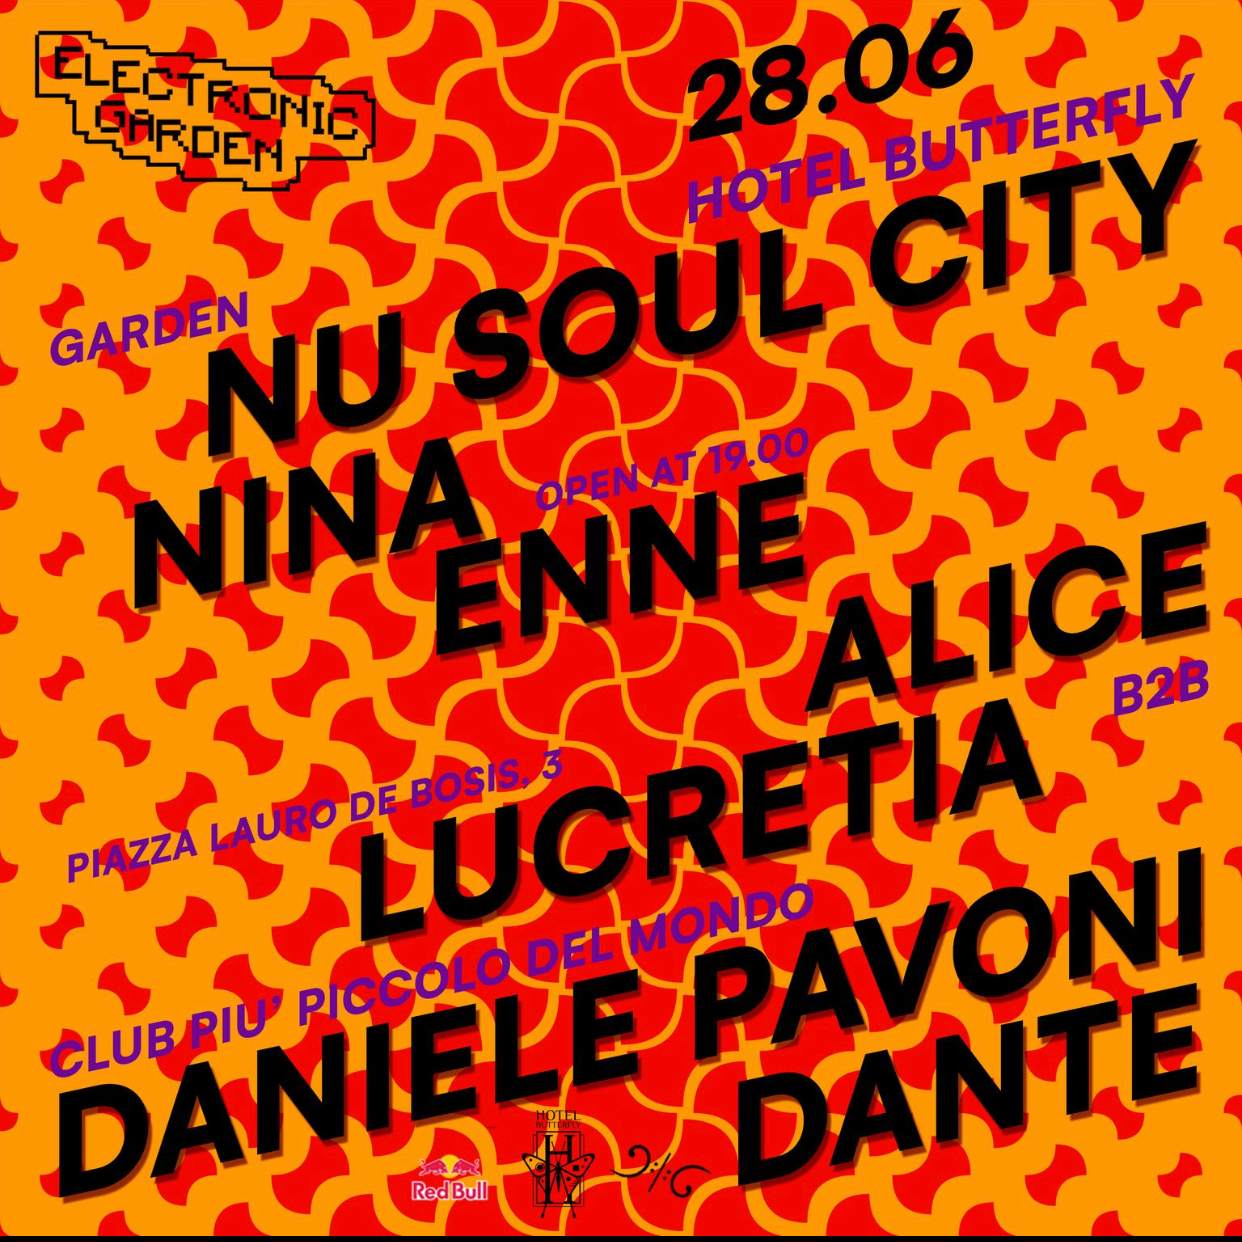 Electronic Garden: Nu Soul City, Nina Enne, Alice, Daniele Pavoni, Dante - フライヤー表